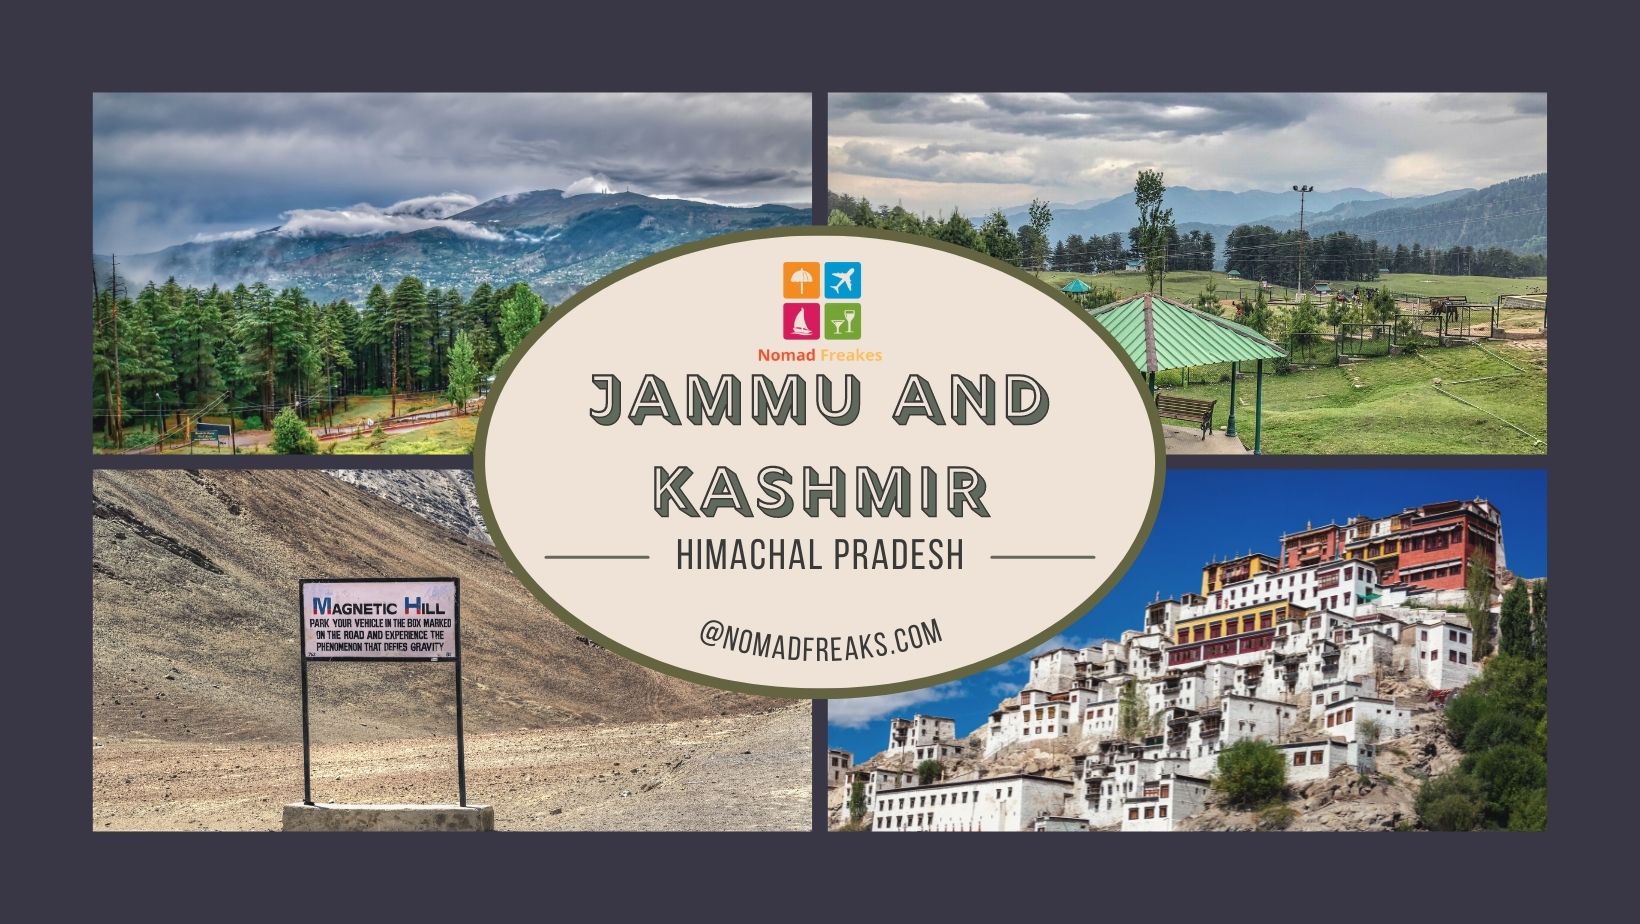 Popular Tourist Destinations in Jammu and Kashmir